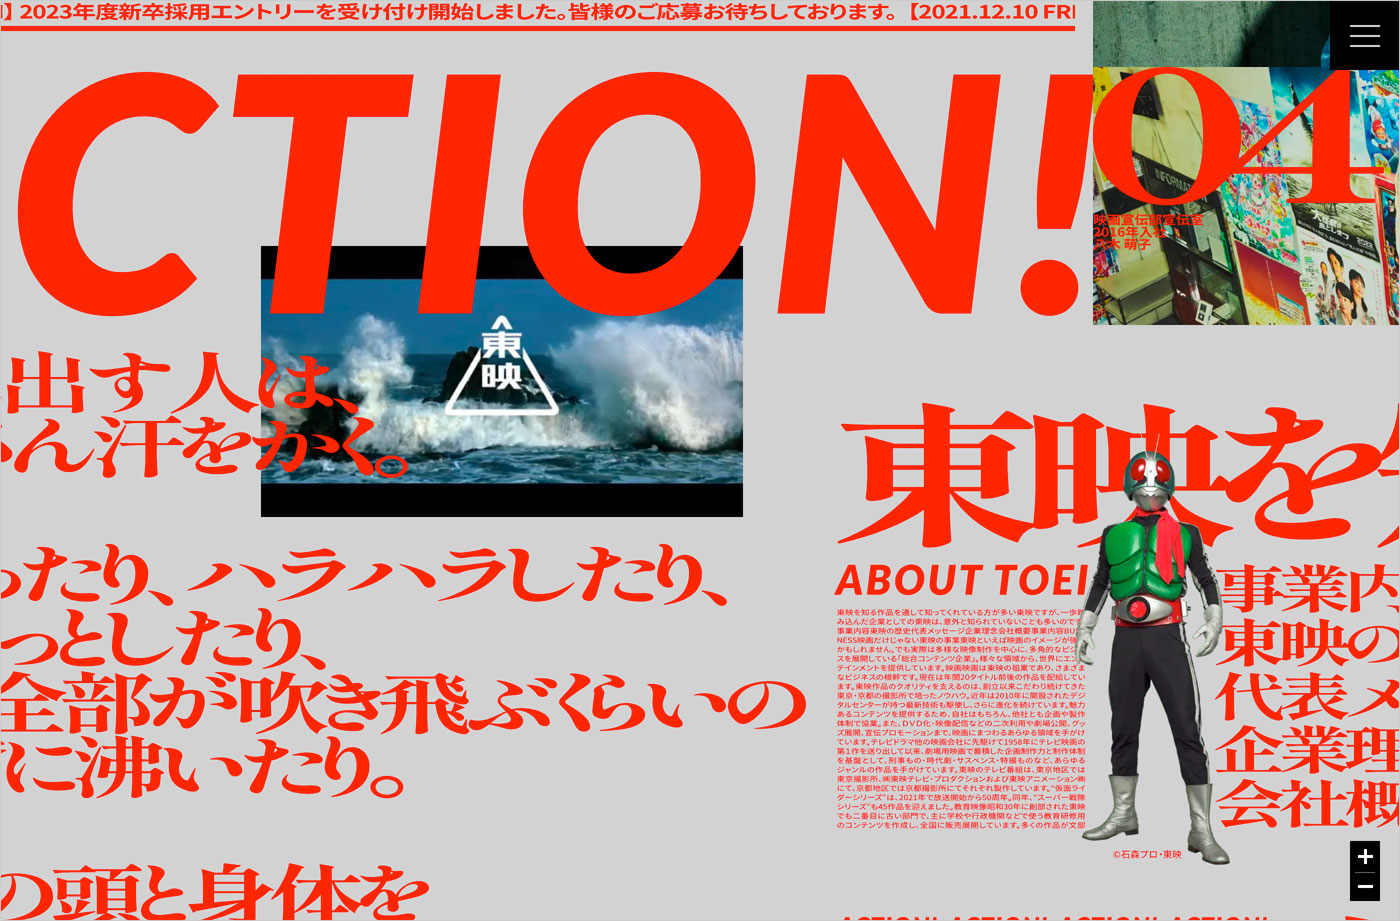 ACTION！ | 東映 リクルートサイトウェブサイトの画面キャプチャ画像